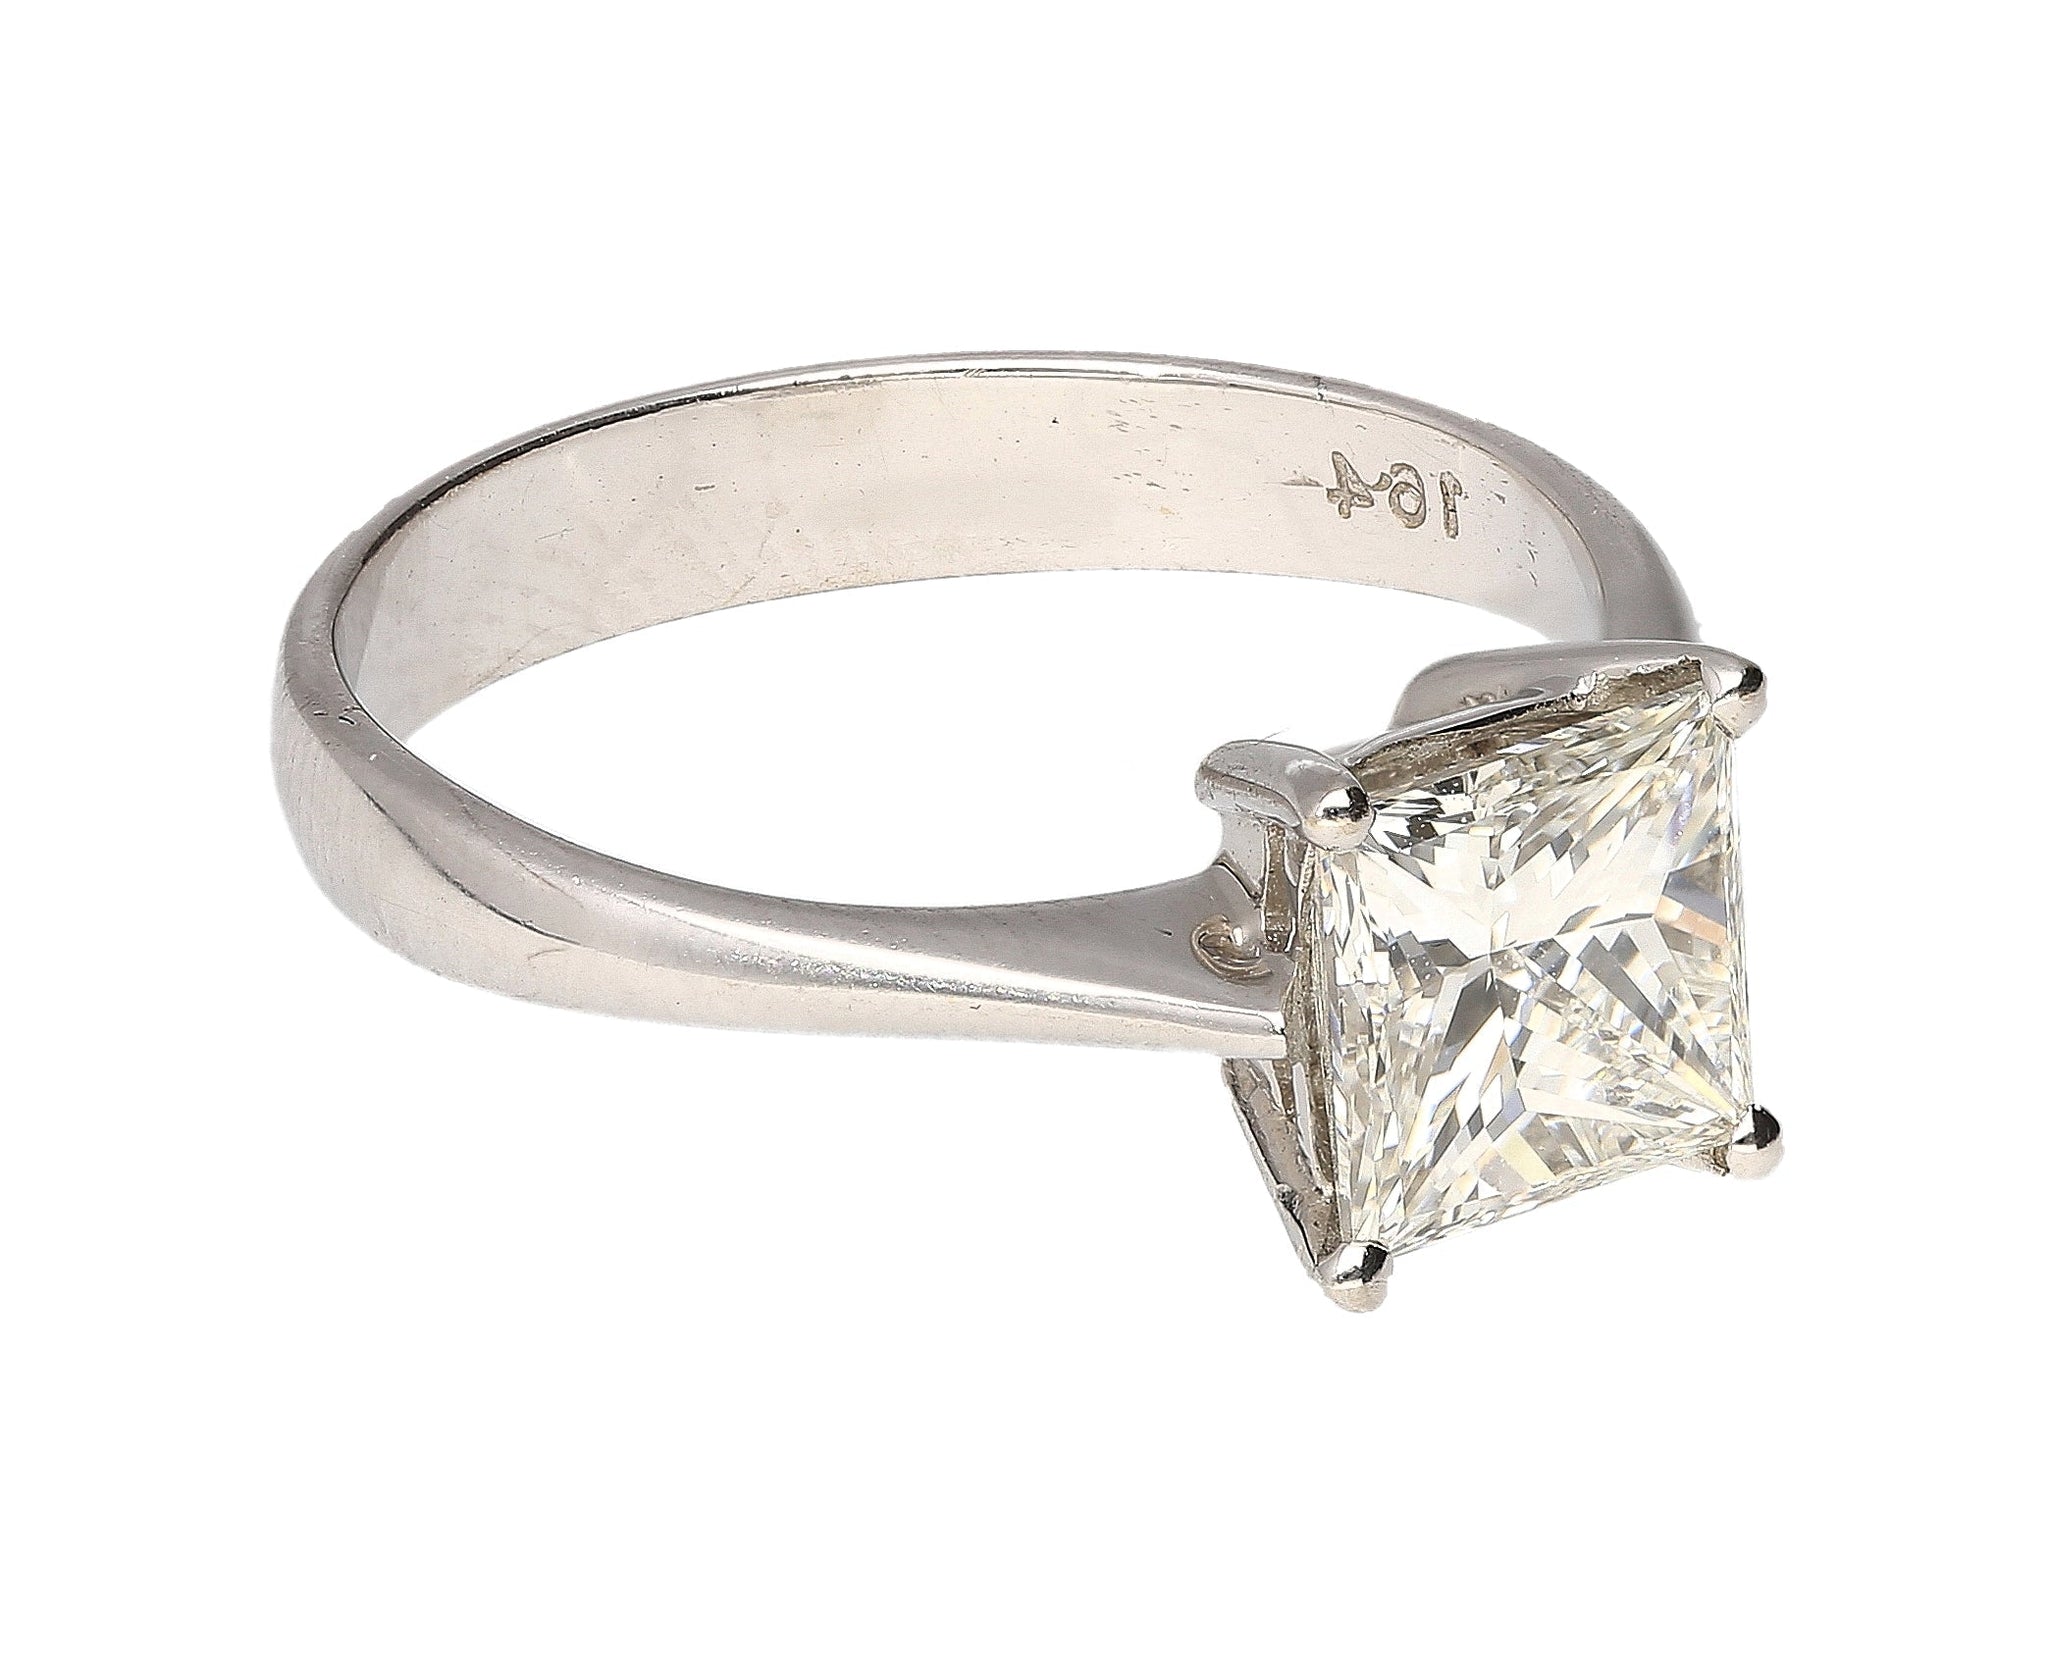 GIA Certified 1.64 Carat Princess Cut Diamond In Tiffany Setting 18K White Gold Ring